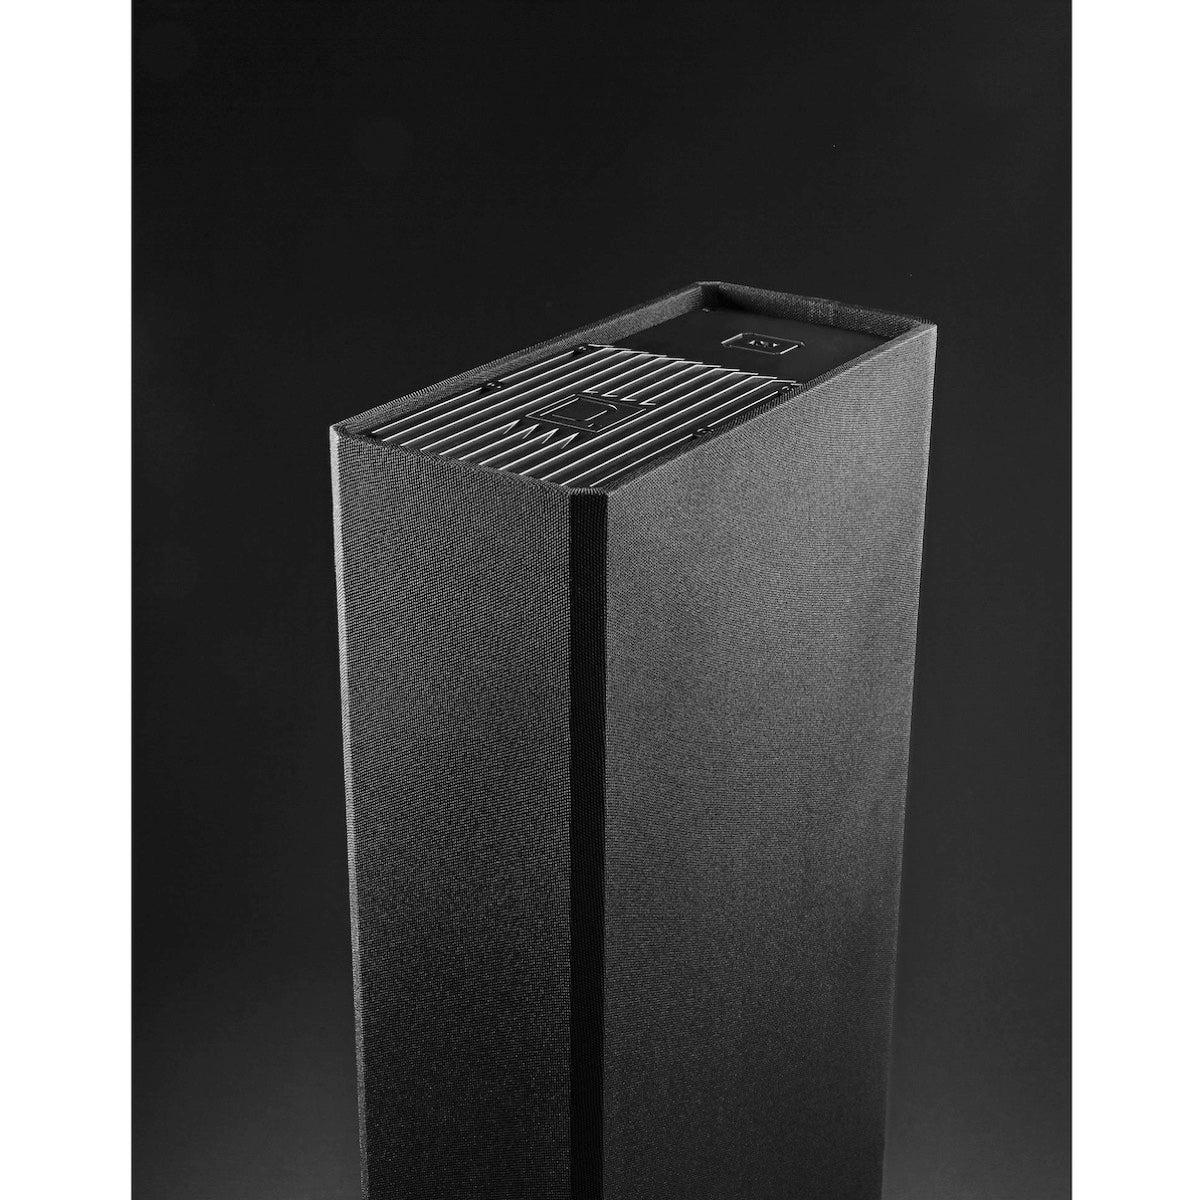 Definitive Technology A90 - Height Speaker Module (Pair) - AVStore